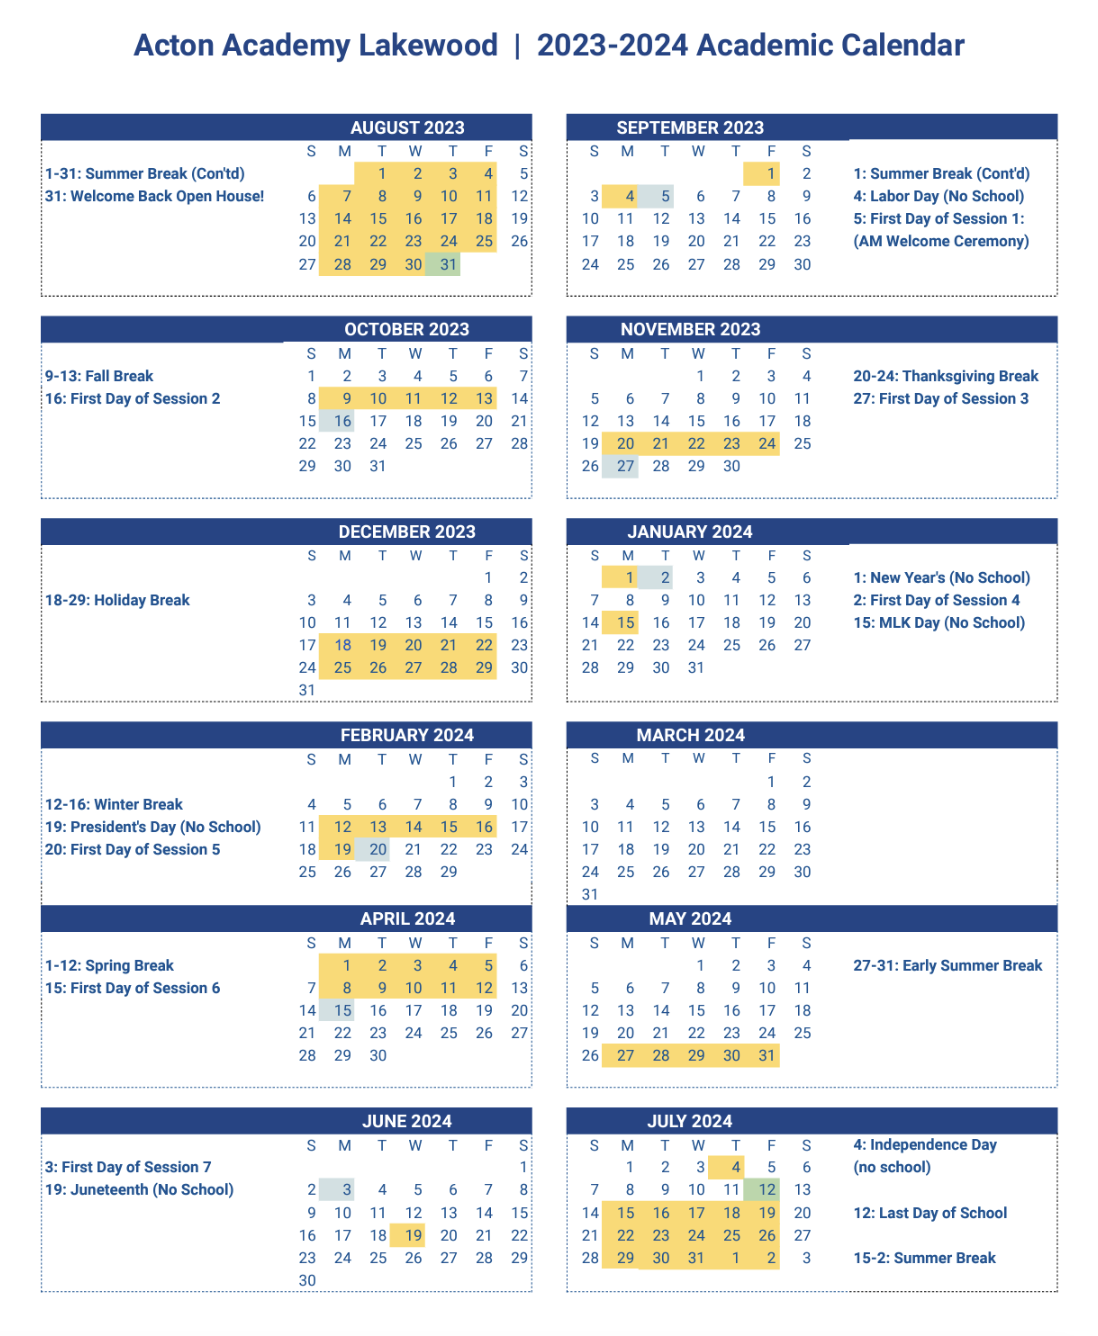 Acton Academy's Academic Calendar